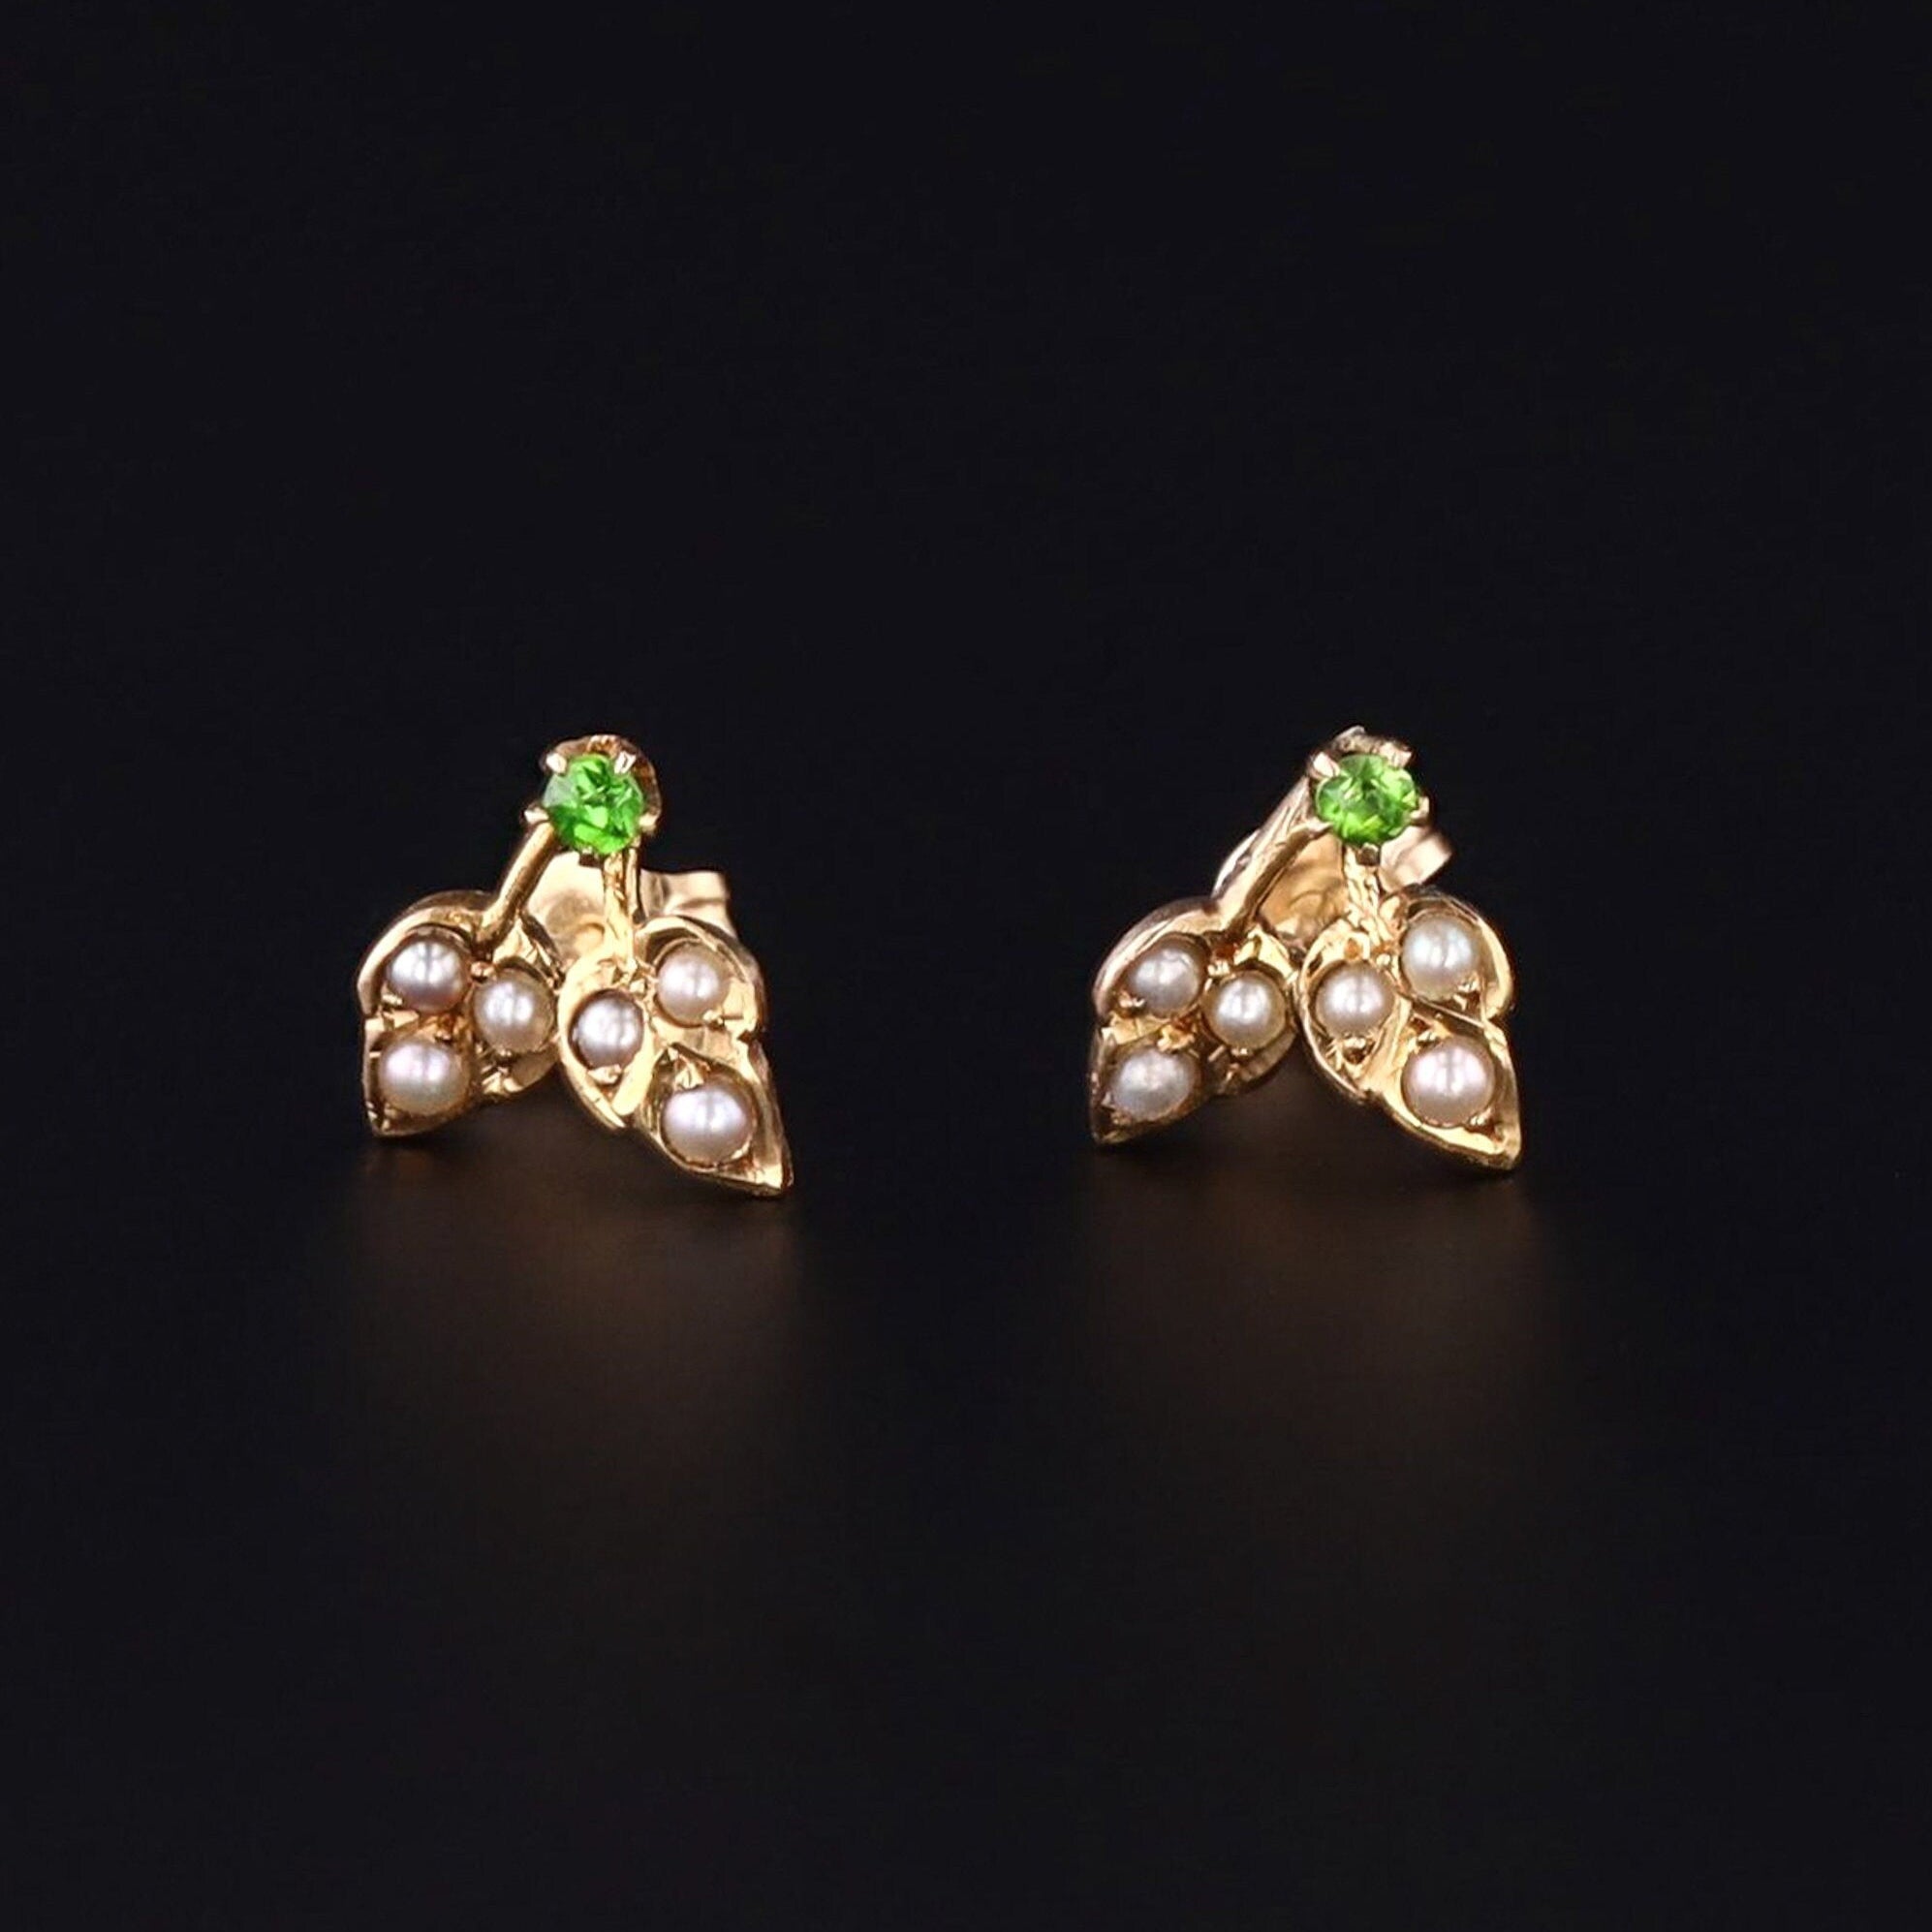 Pearl & Demantoid Garnet Flower Earrings | Antique Pin Conversion Earrings | Pearl Earrings | Bridal Earrings